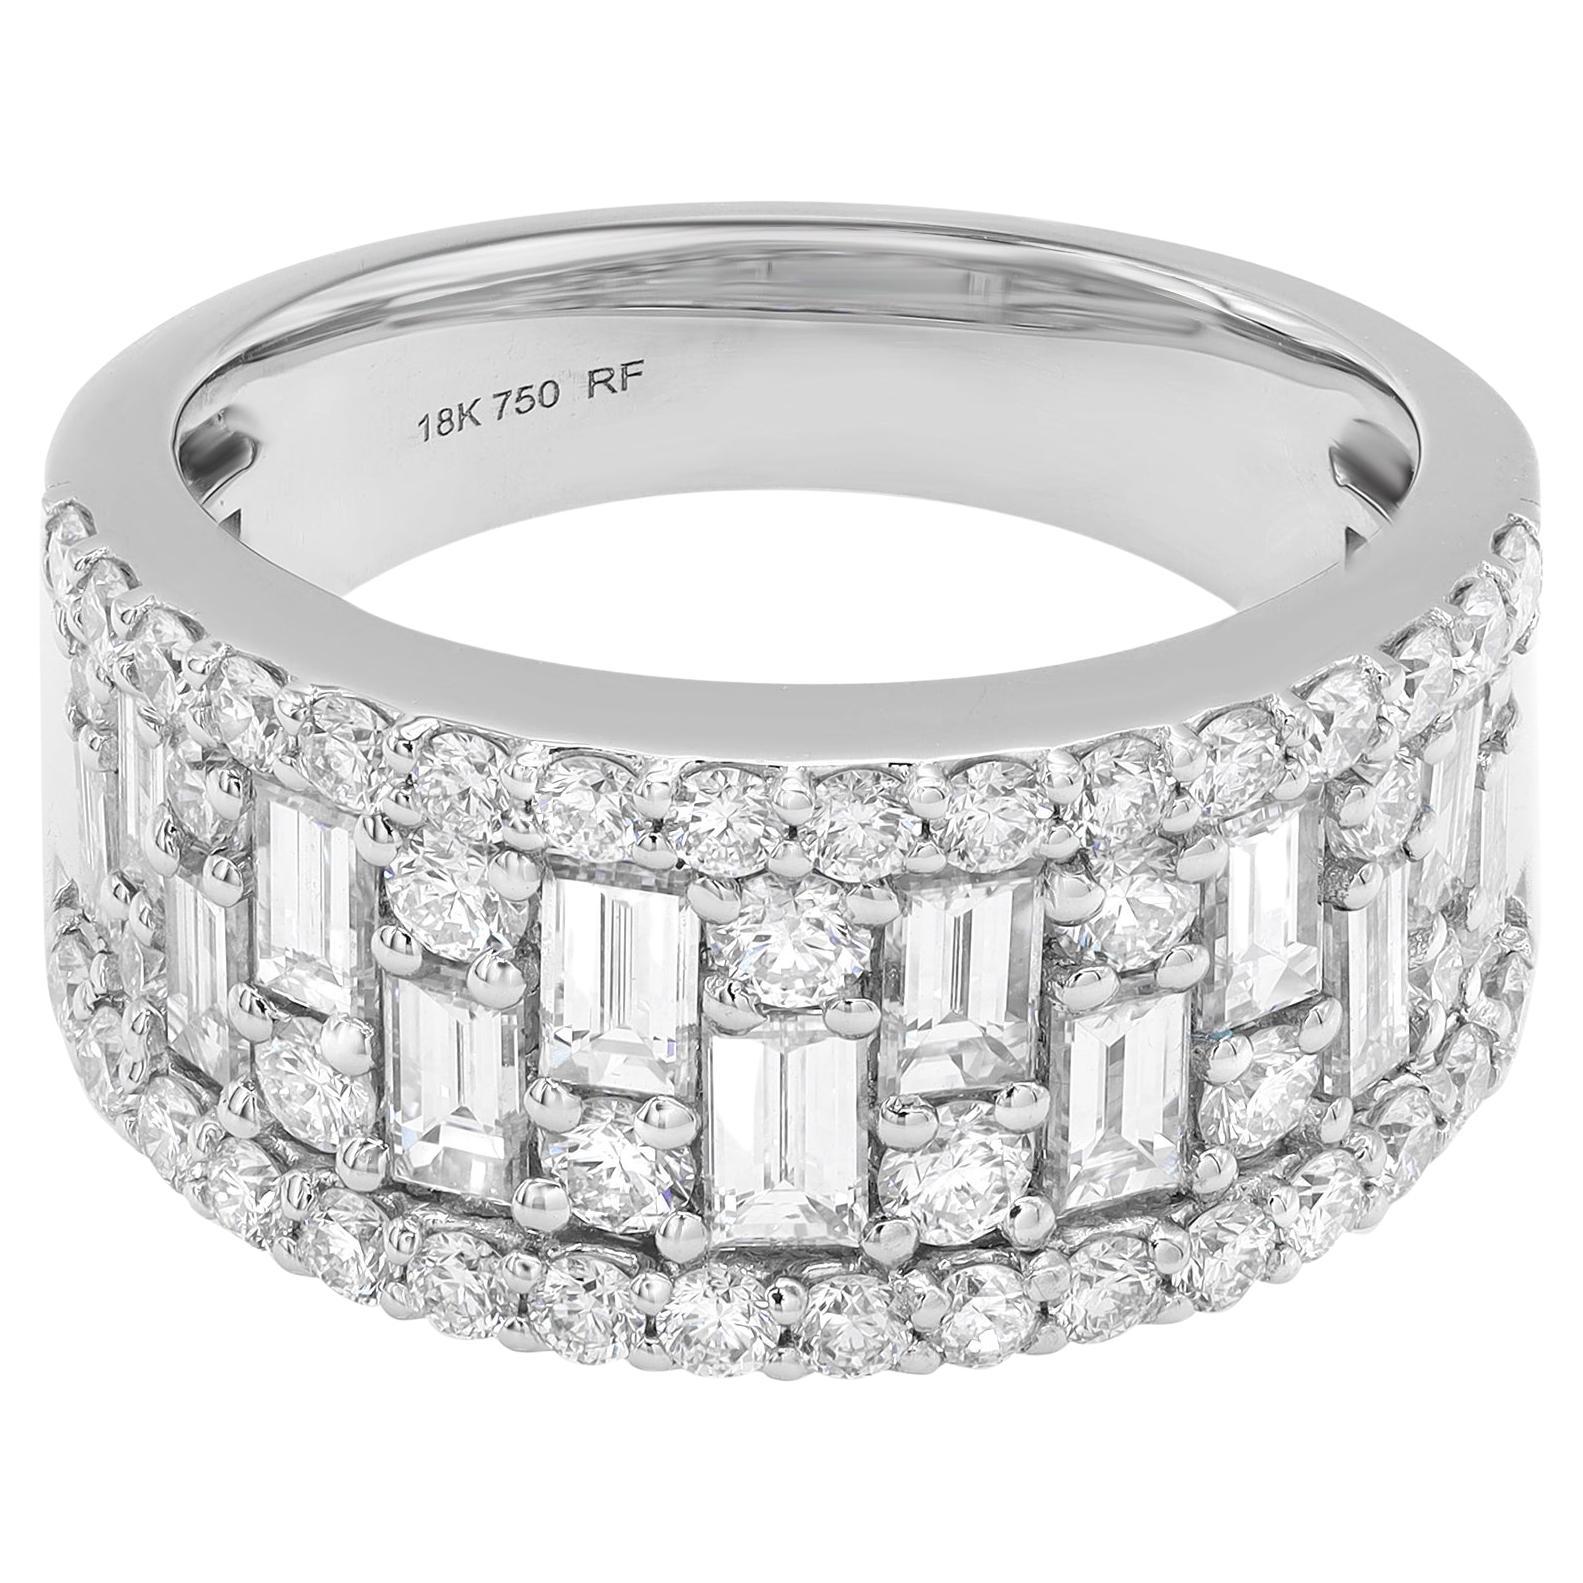 Rachel Koen Baguette Round Cut Diamond Ring 18K White Gold 2.11Cttw For Sale